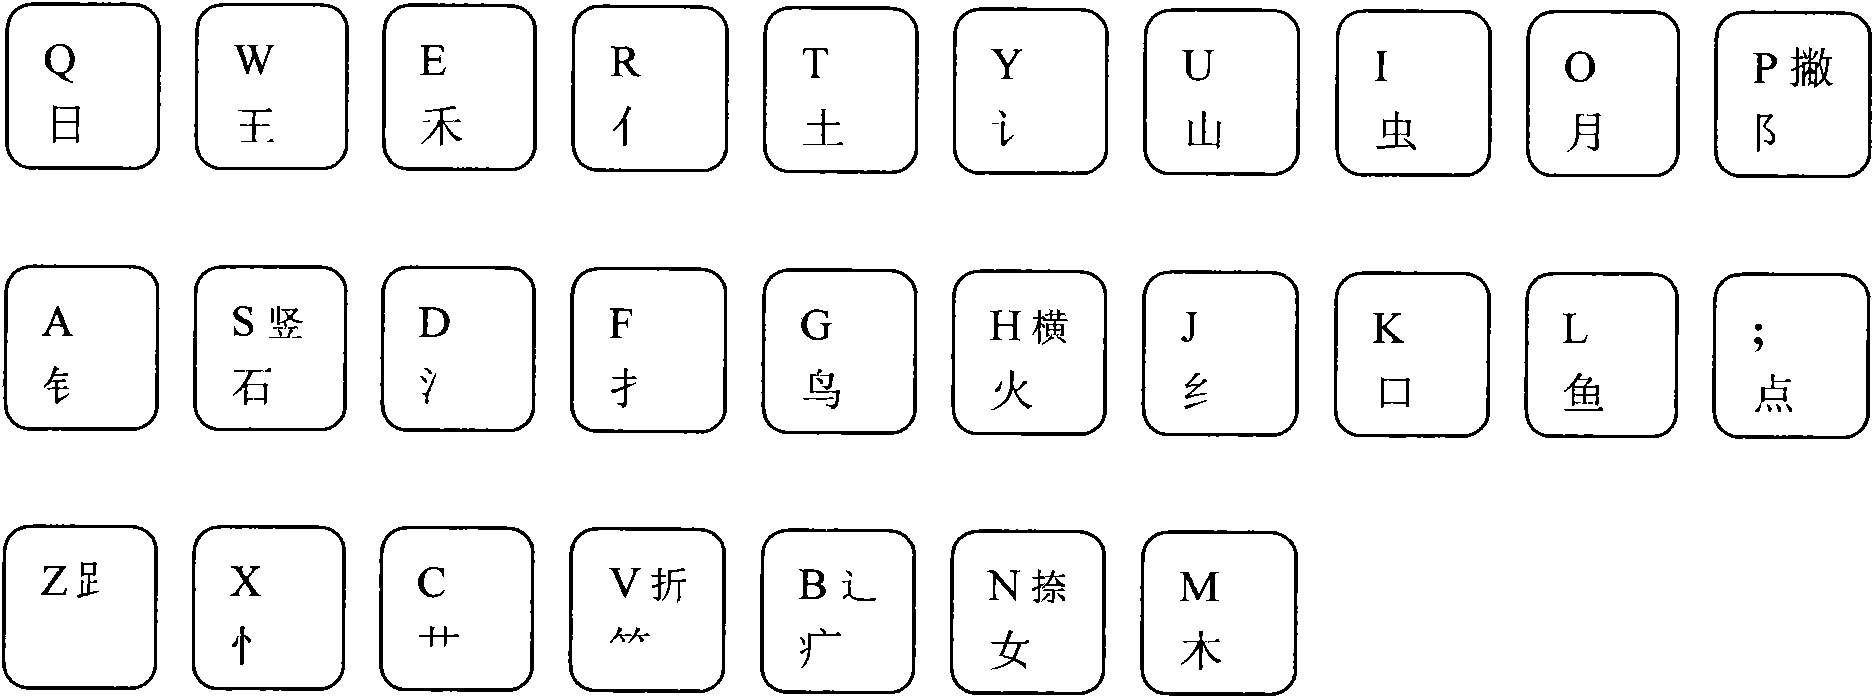 Initial component pinyin input method